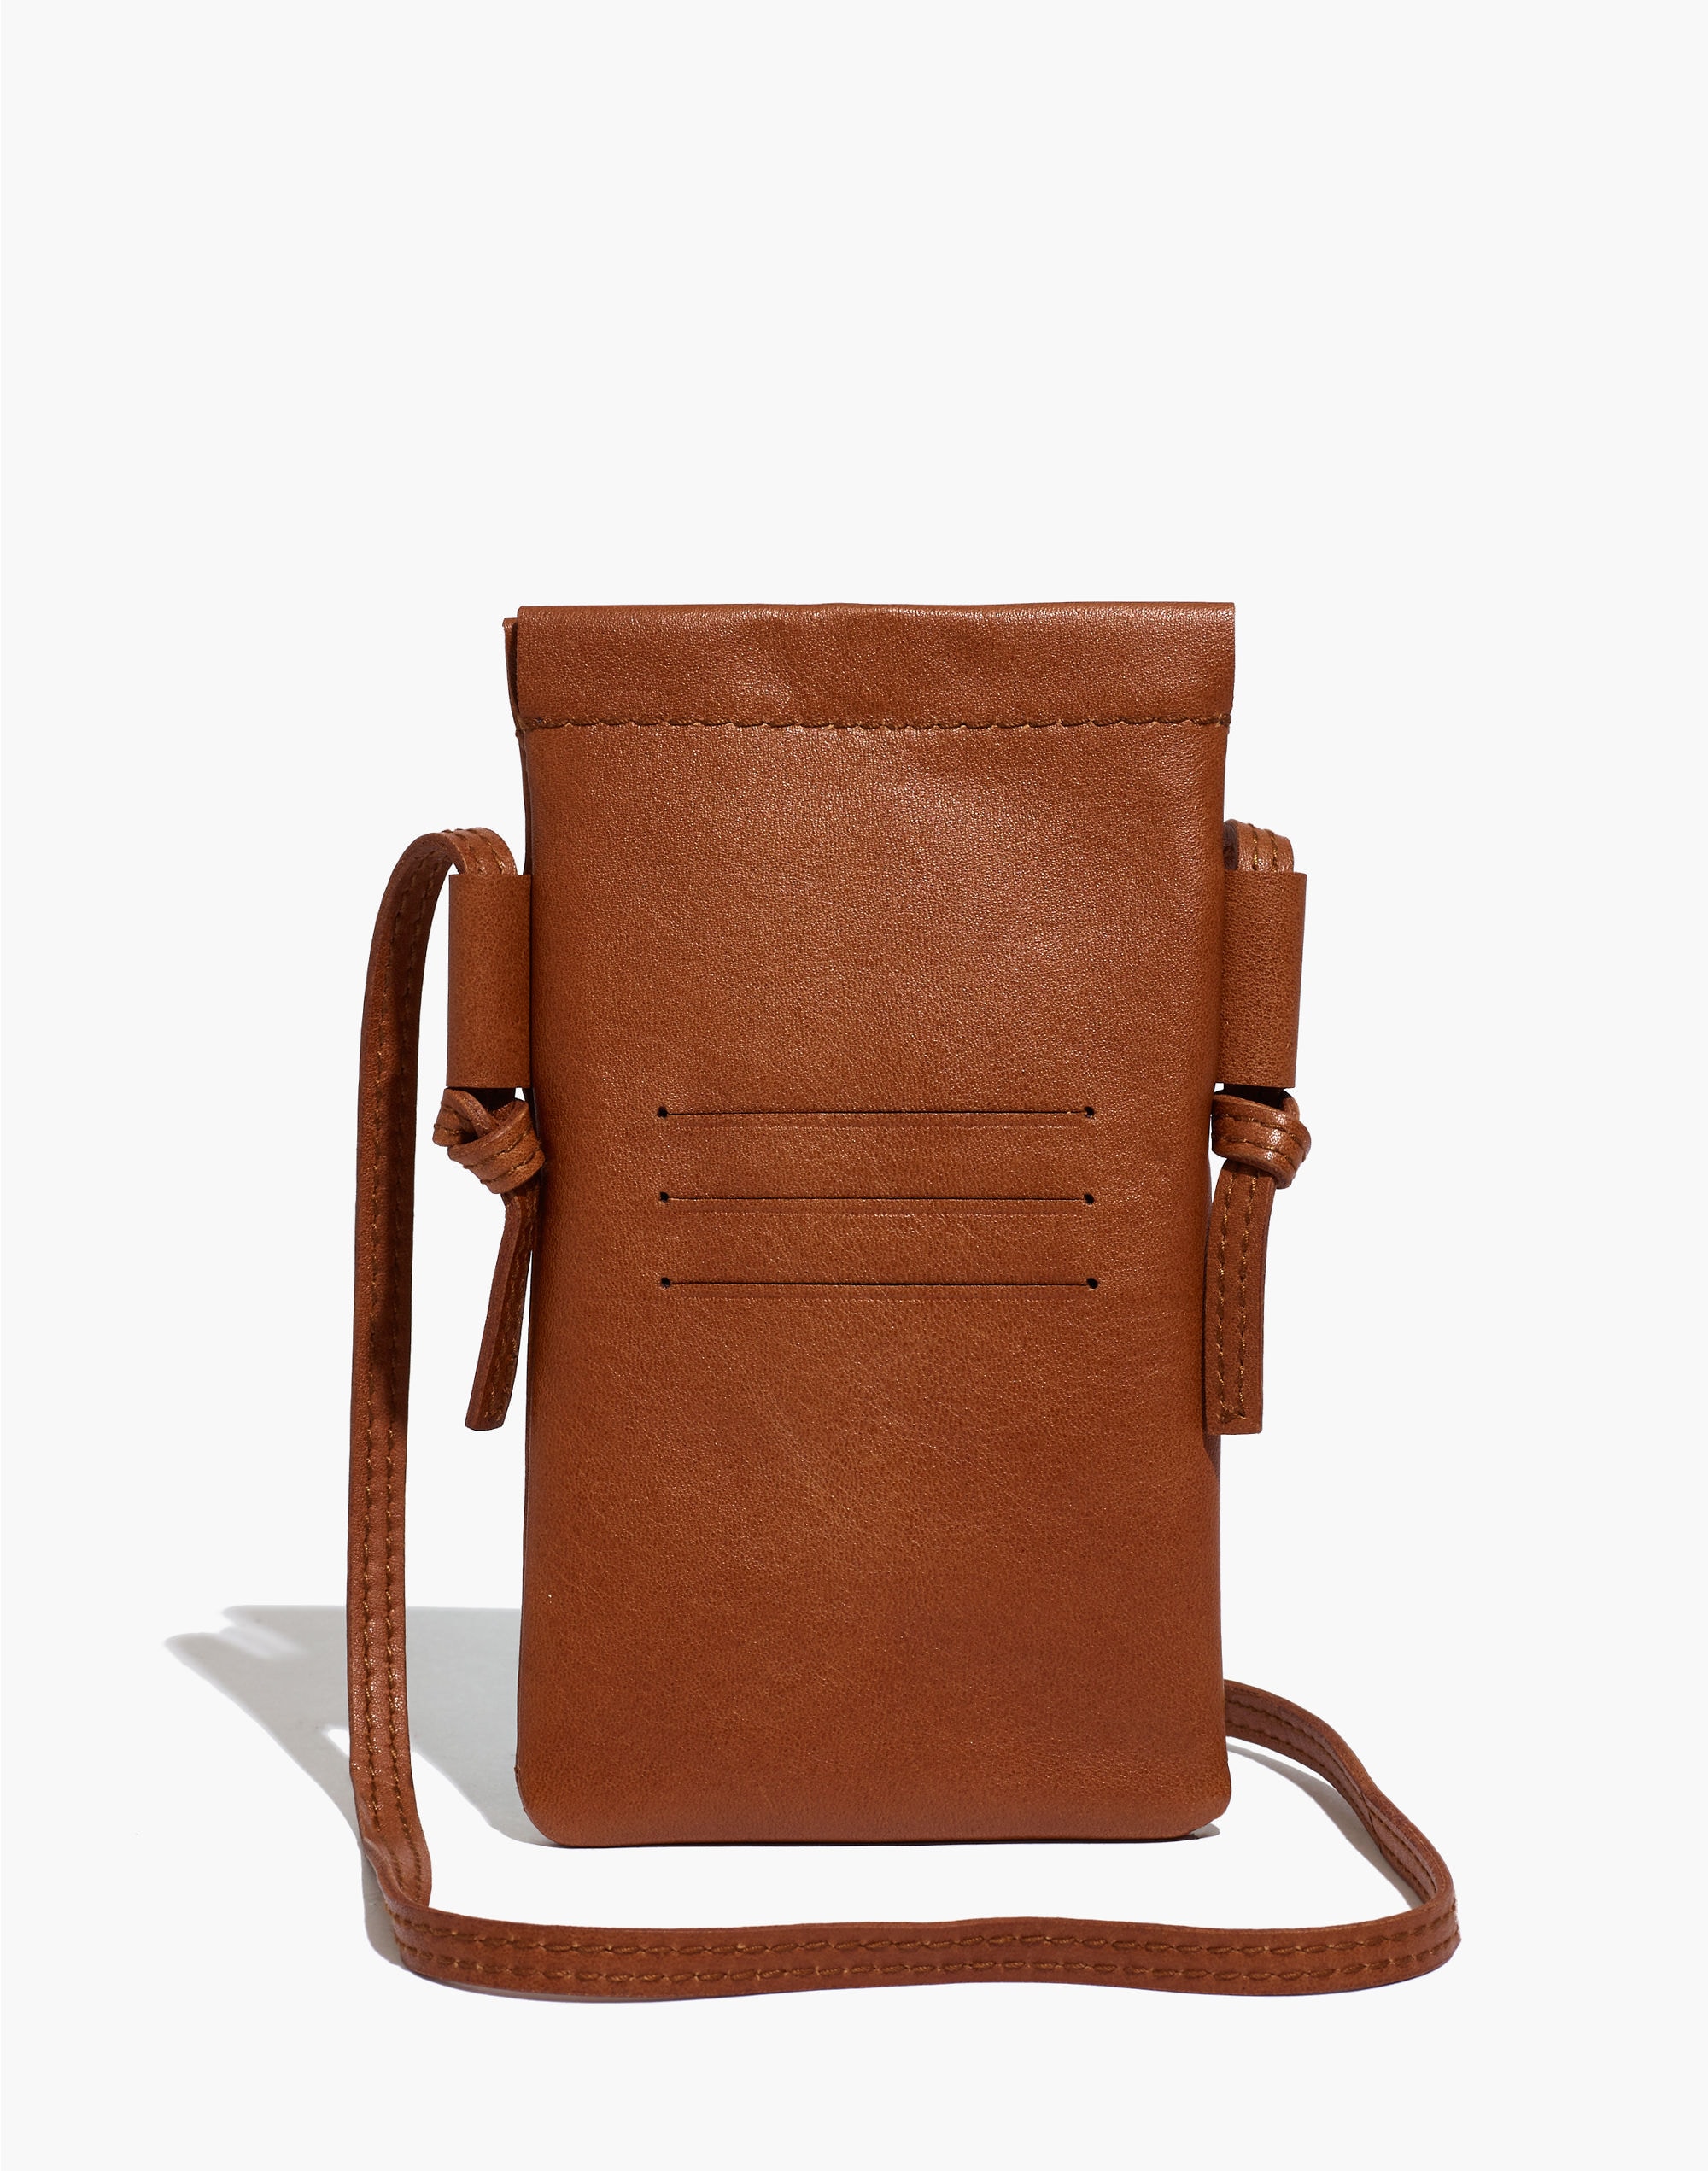 The Leather Smartphone Crossbody Bag